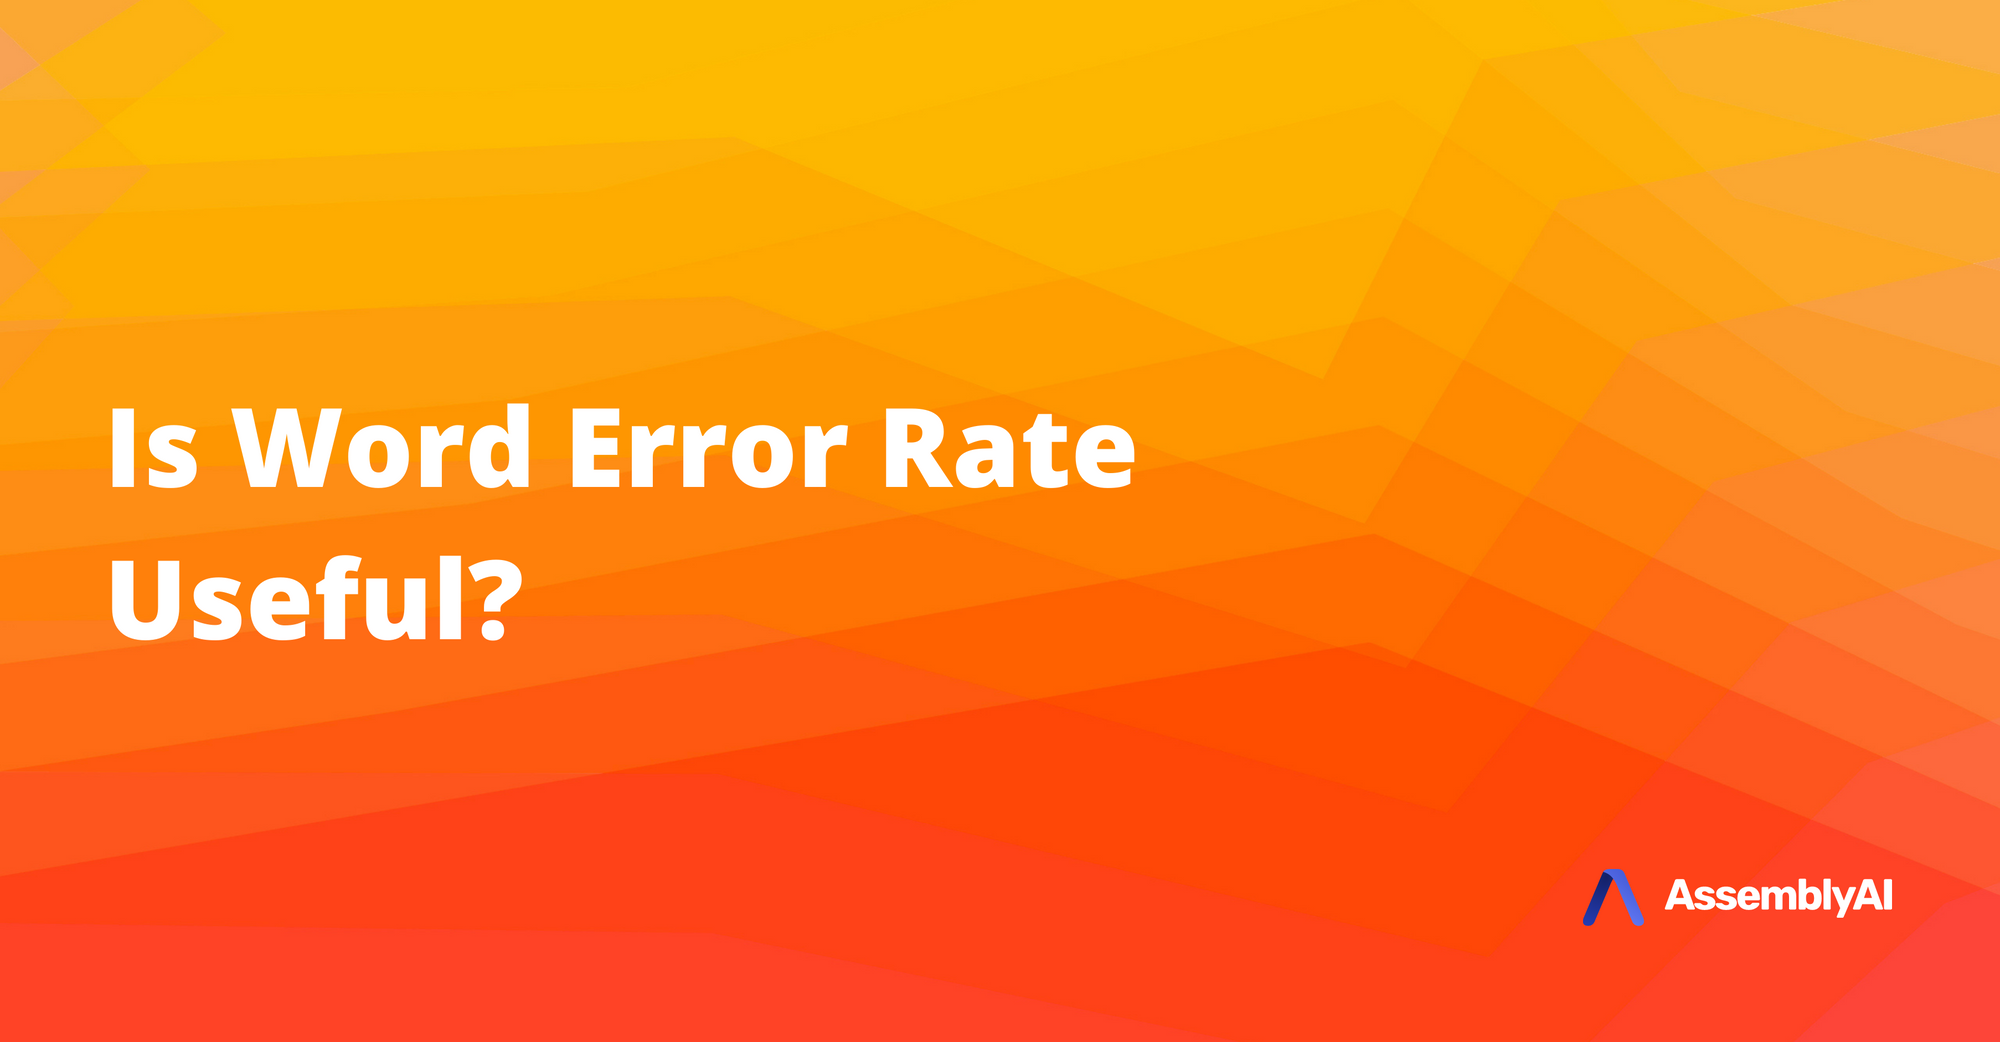 Is Word Error Rate Useful?